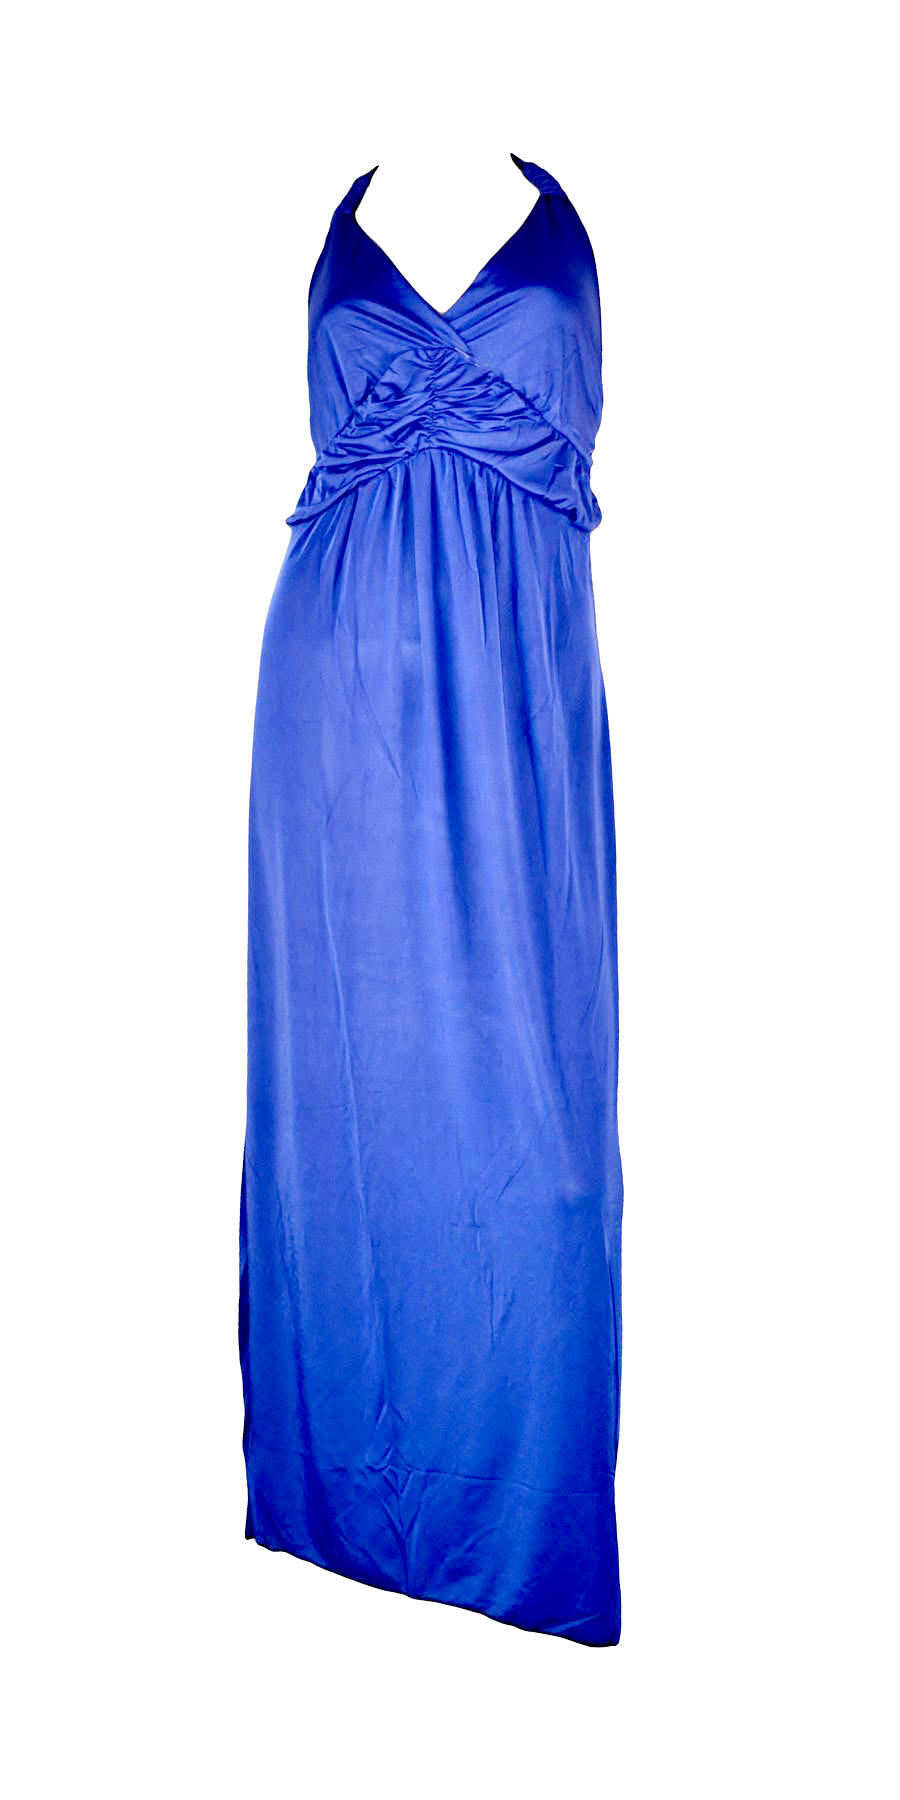 Belle Donne- WomenÃ¢x20AC;TMs Maxi Dress Sleeveless Halter Top Solid Colors Long Dress - Blue